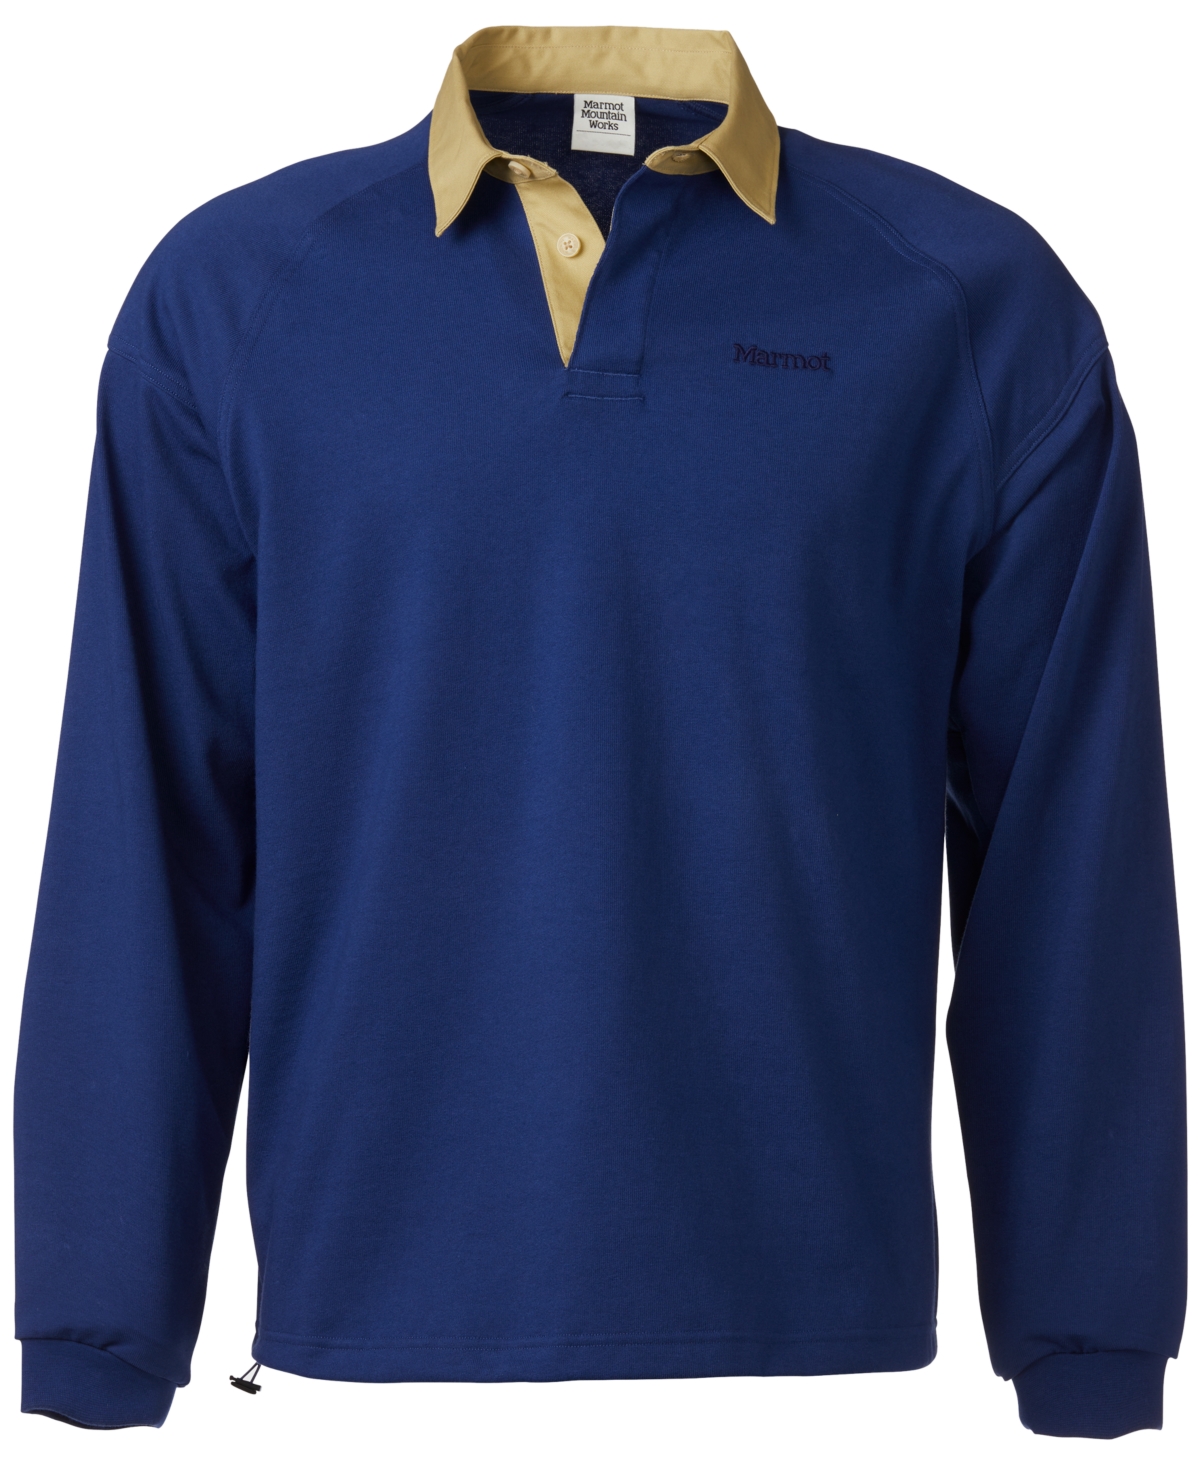 Men's Mountain Works Long-Sleeve Polo Shirt - Twilight Blue/light Oak